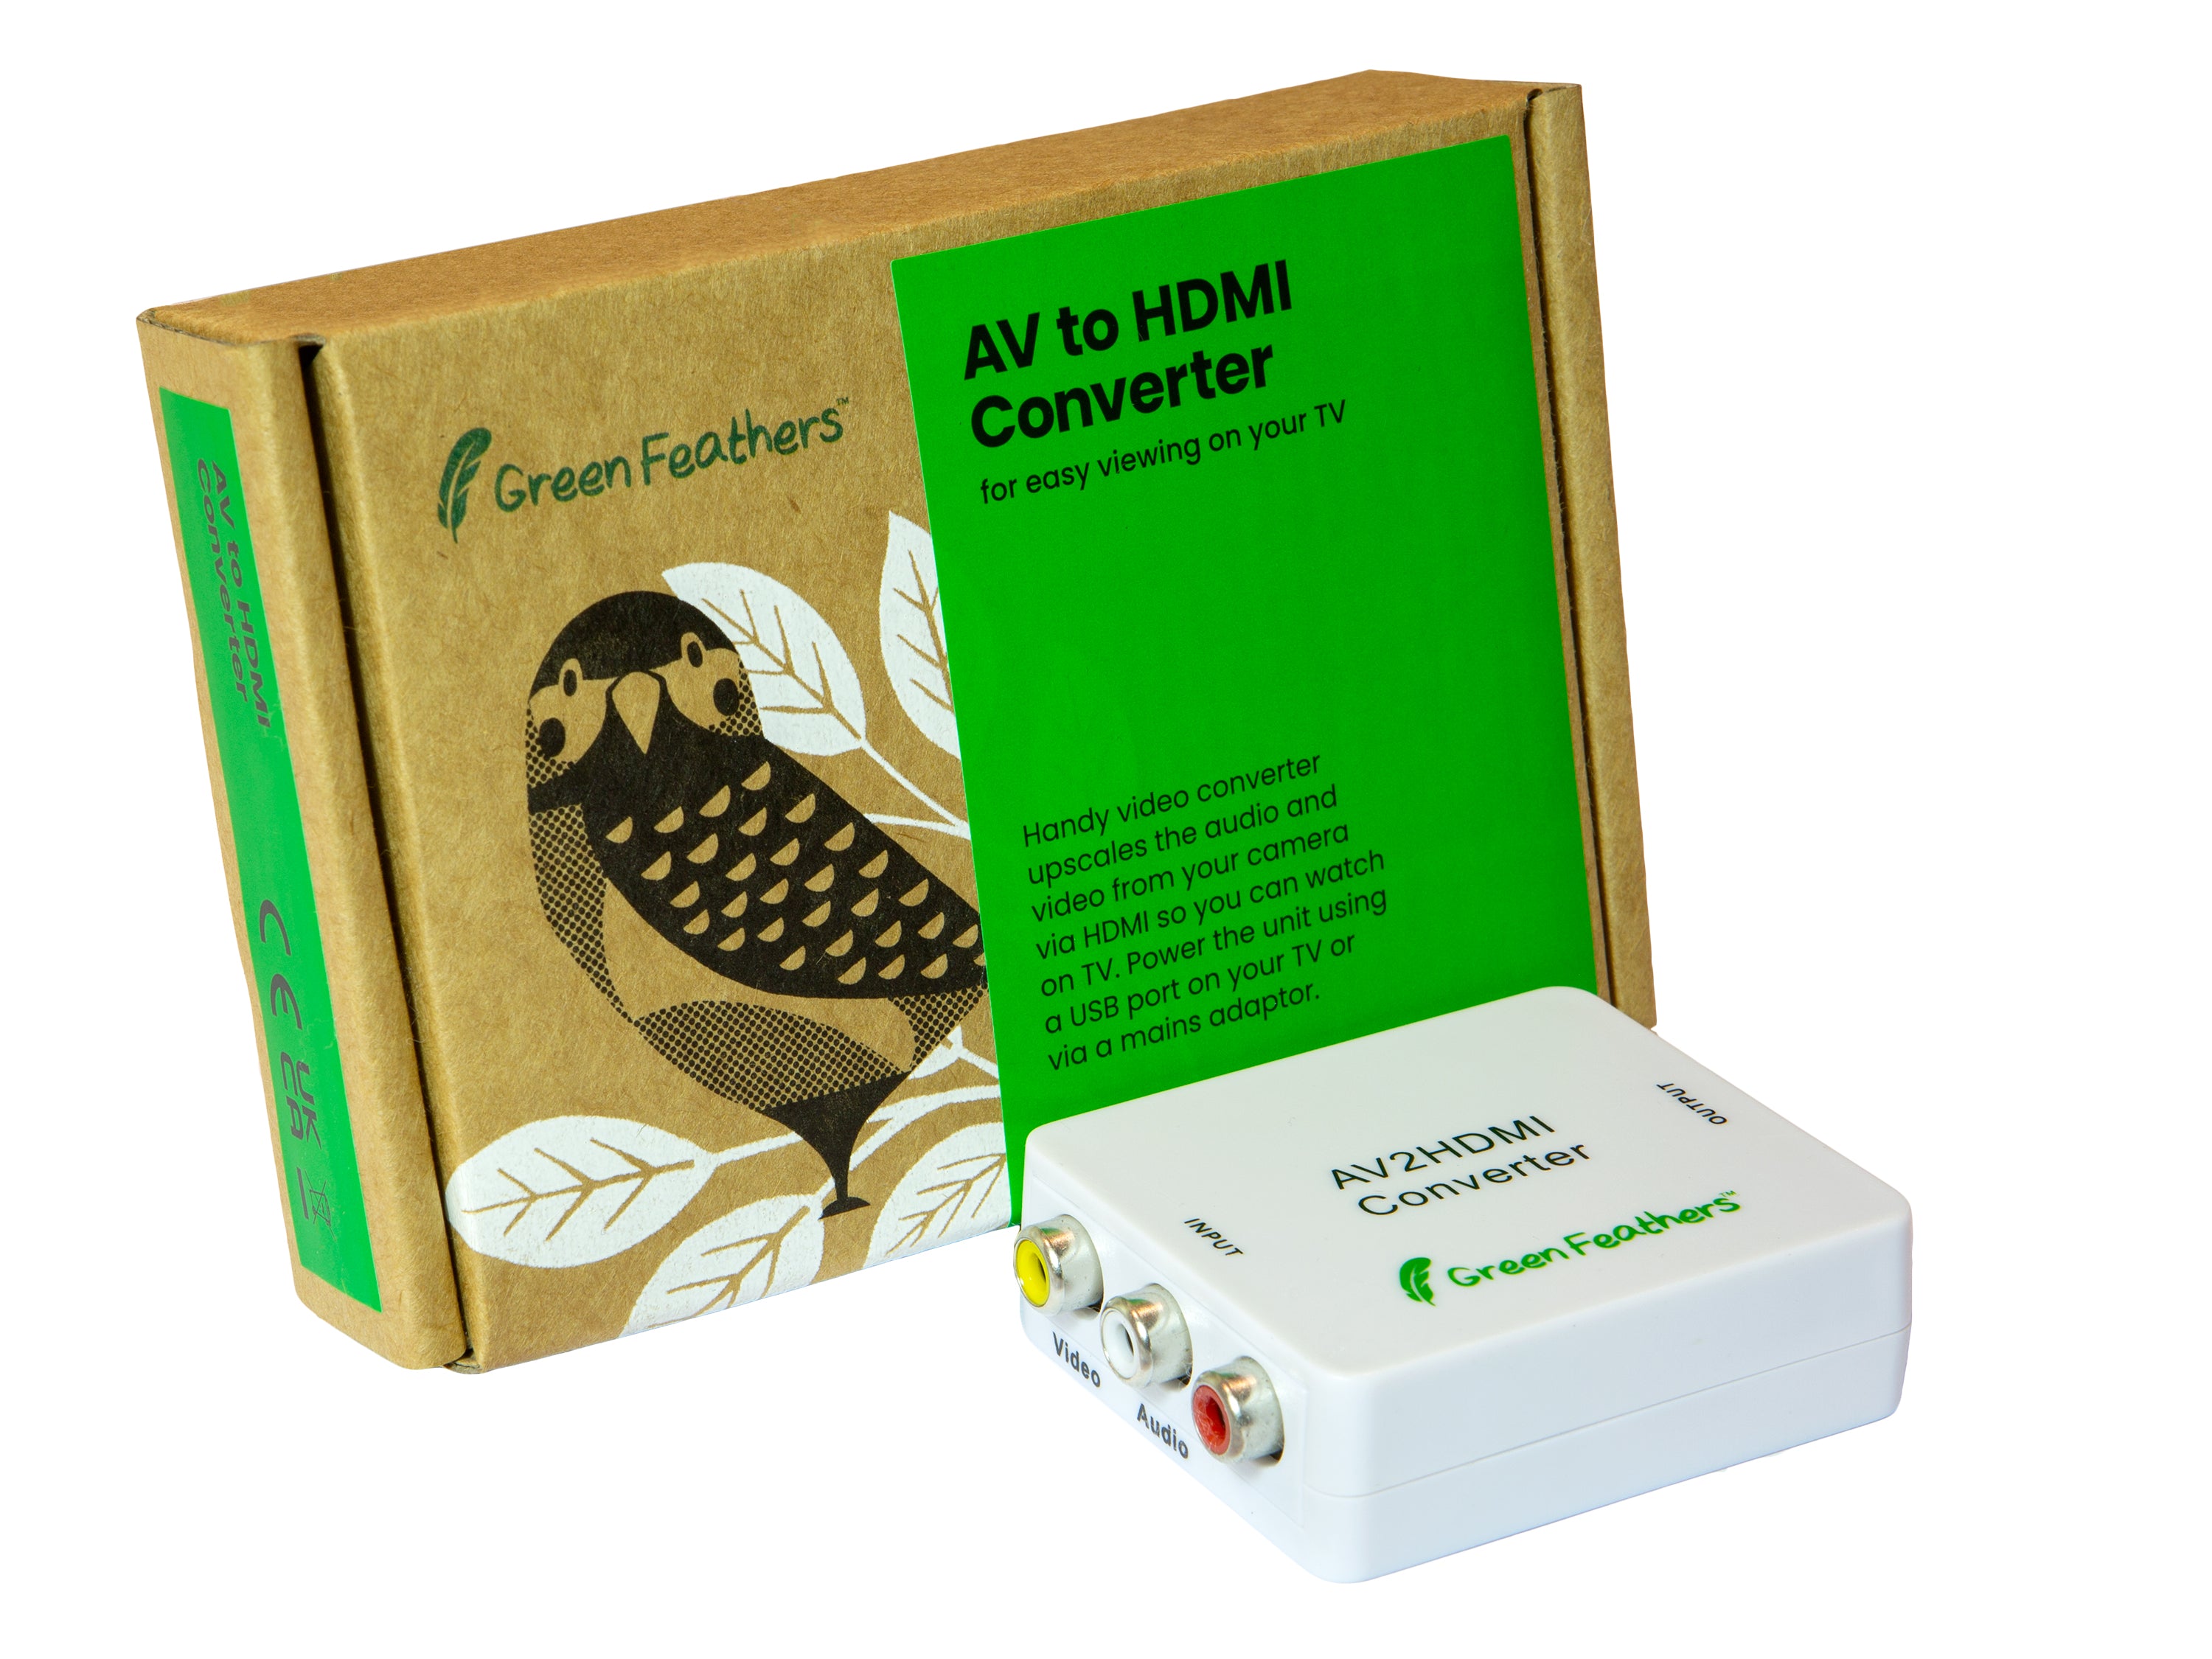 DIY Bird Box Camera Kit - Build Nest Box With Camera